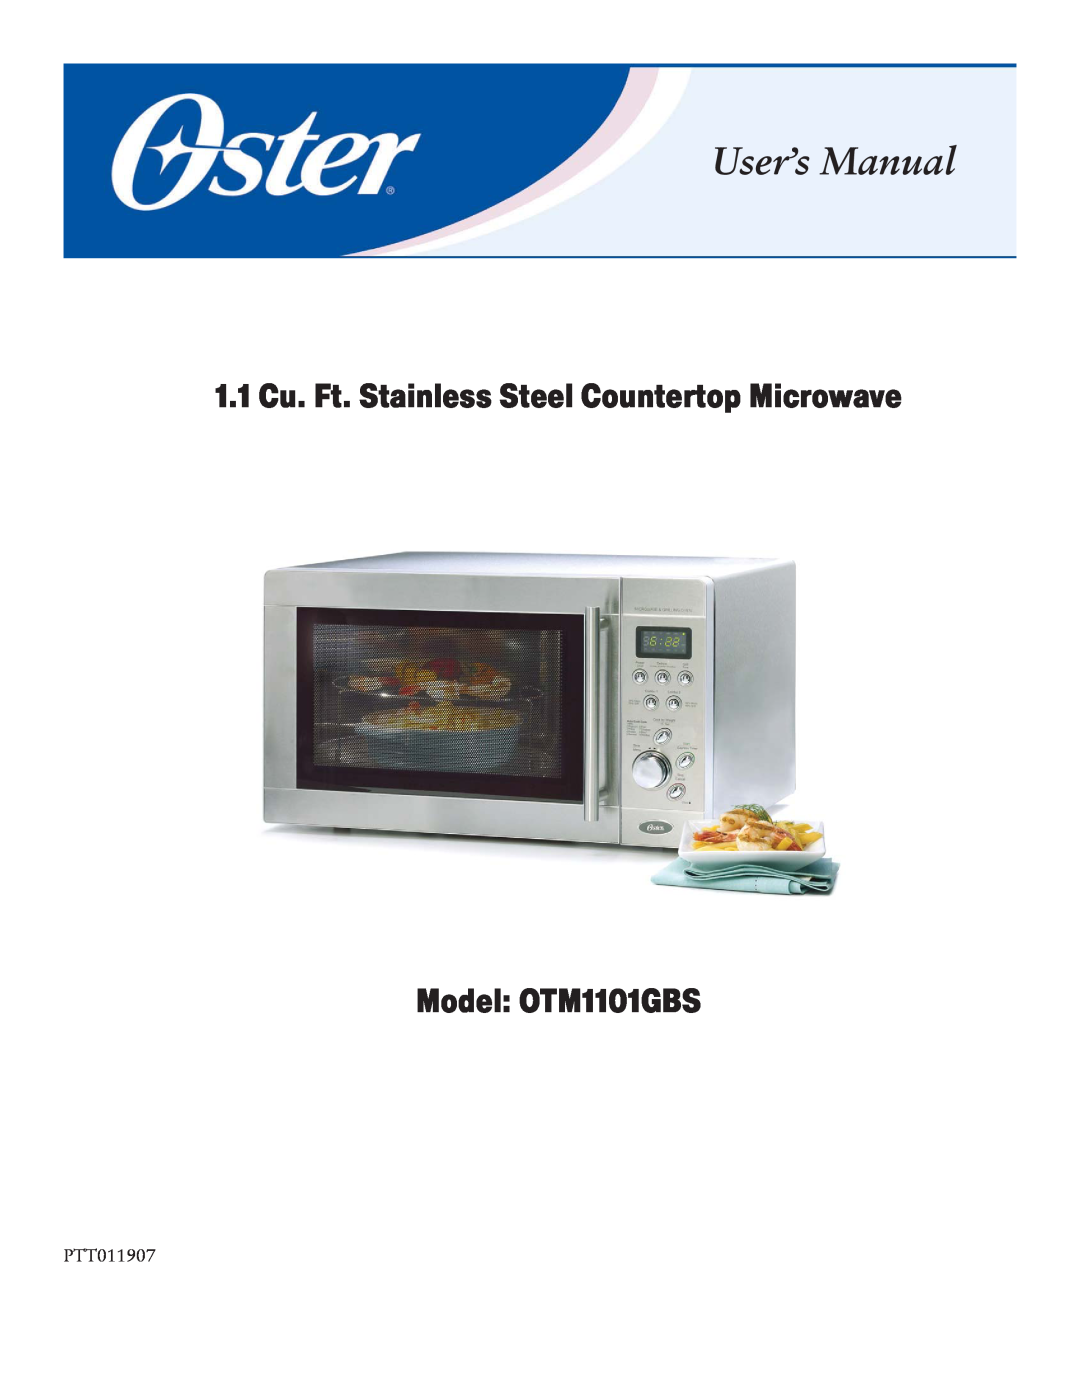 Oster user manual 1.1 Cu. Ft. Stainless Steel Countertop Microwave, Model OTM1101GBS, PTT011907 